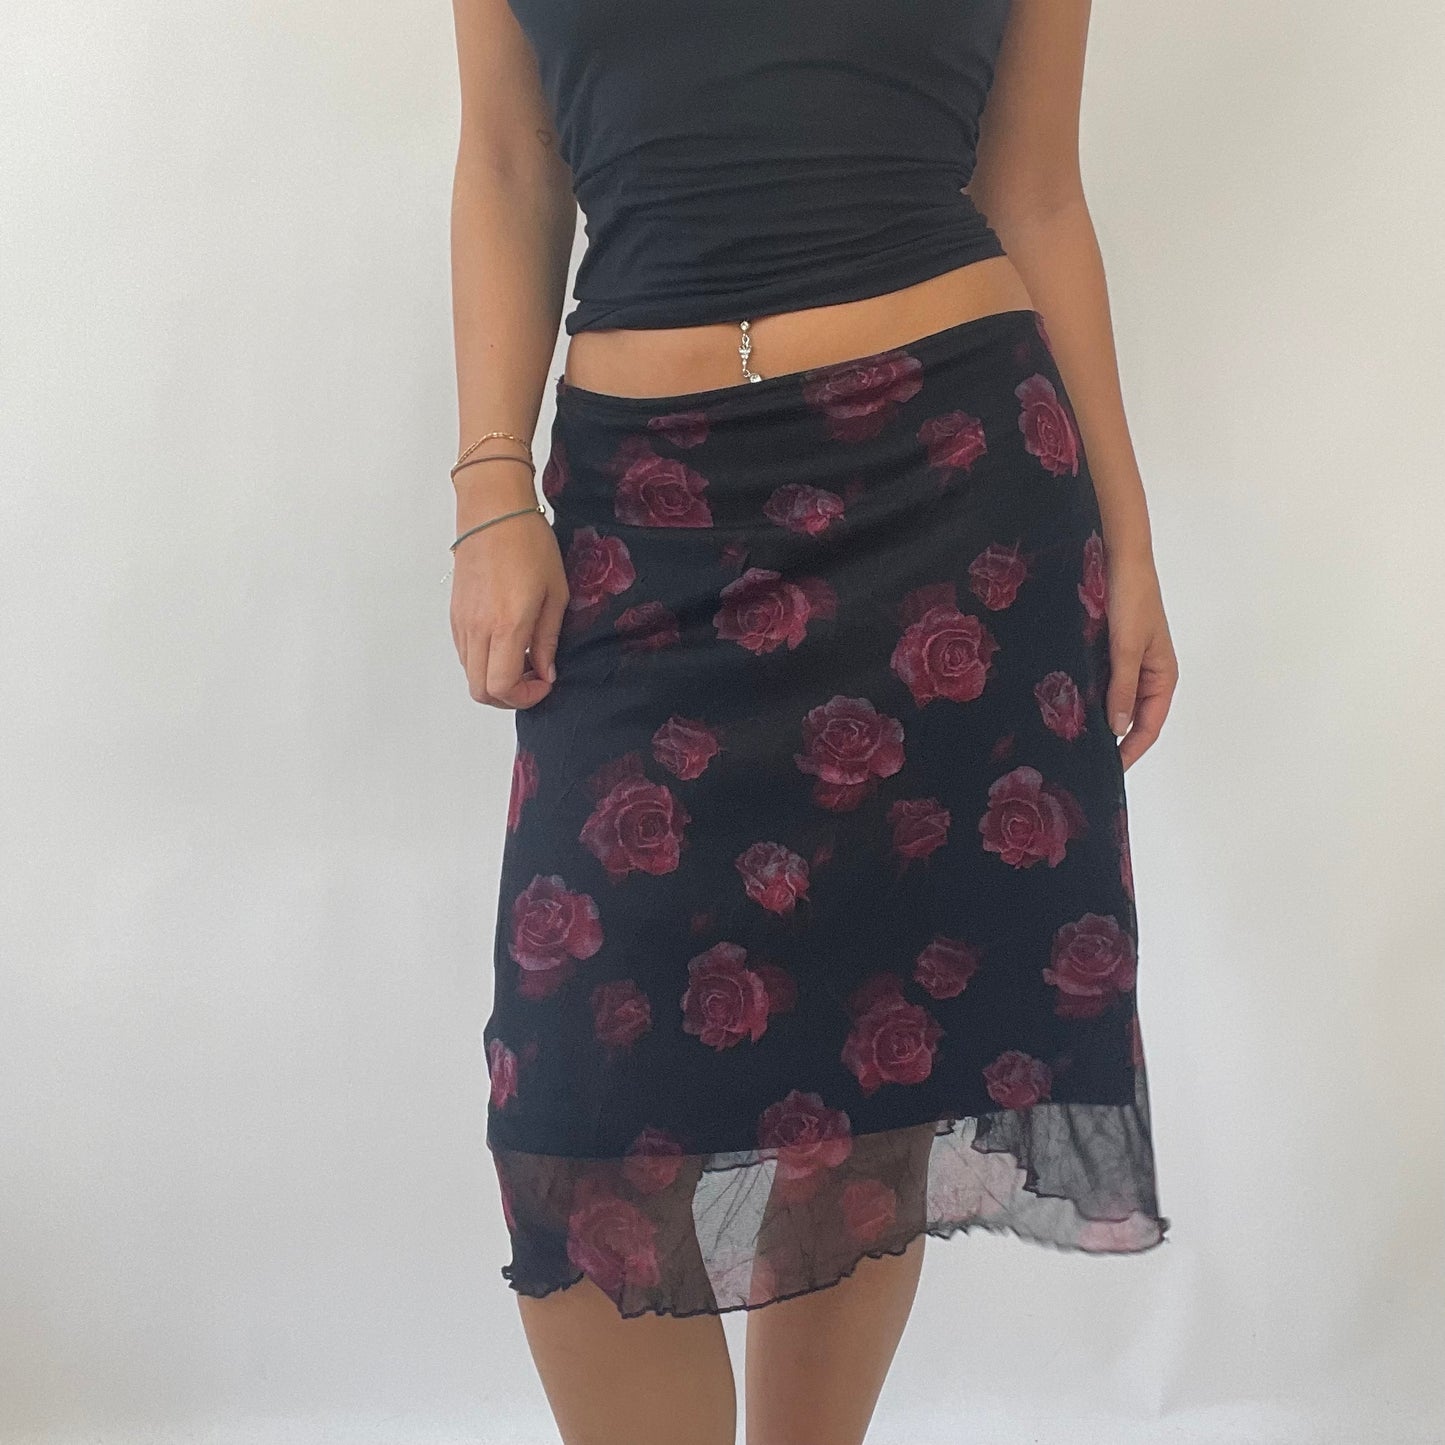 OLIVIA RODRIGO DROP | small black mesh skirt with rose detail